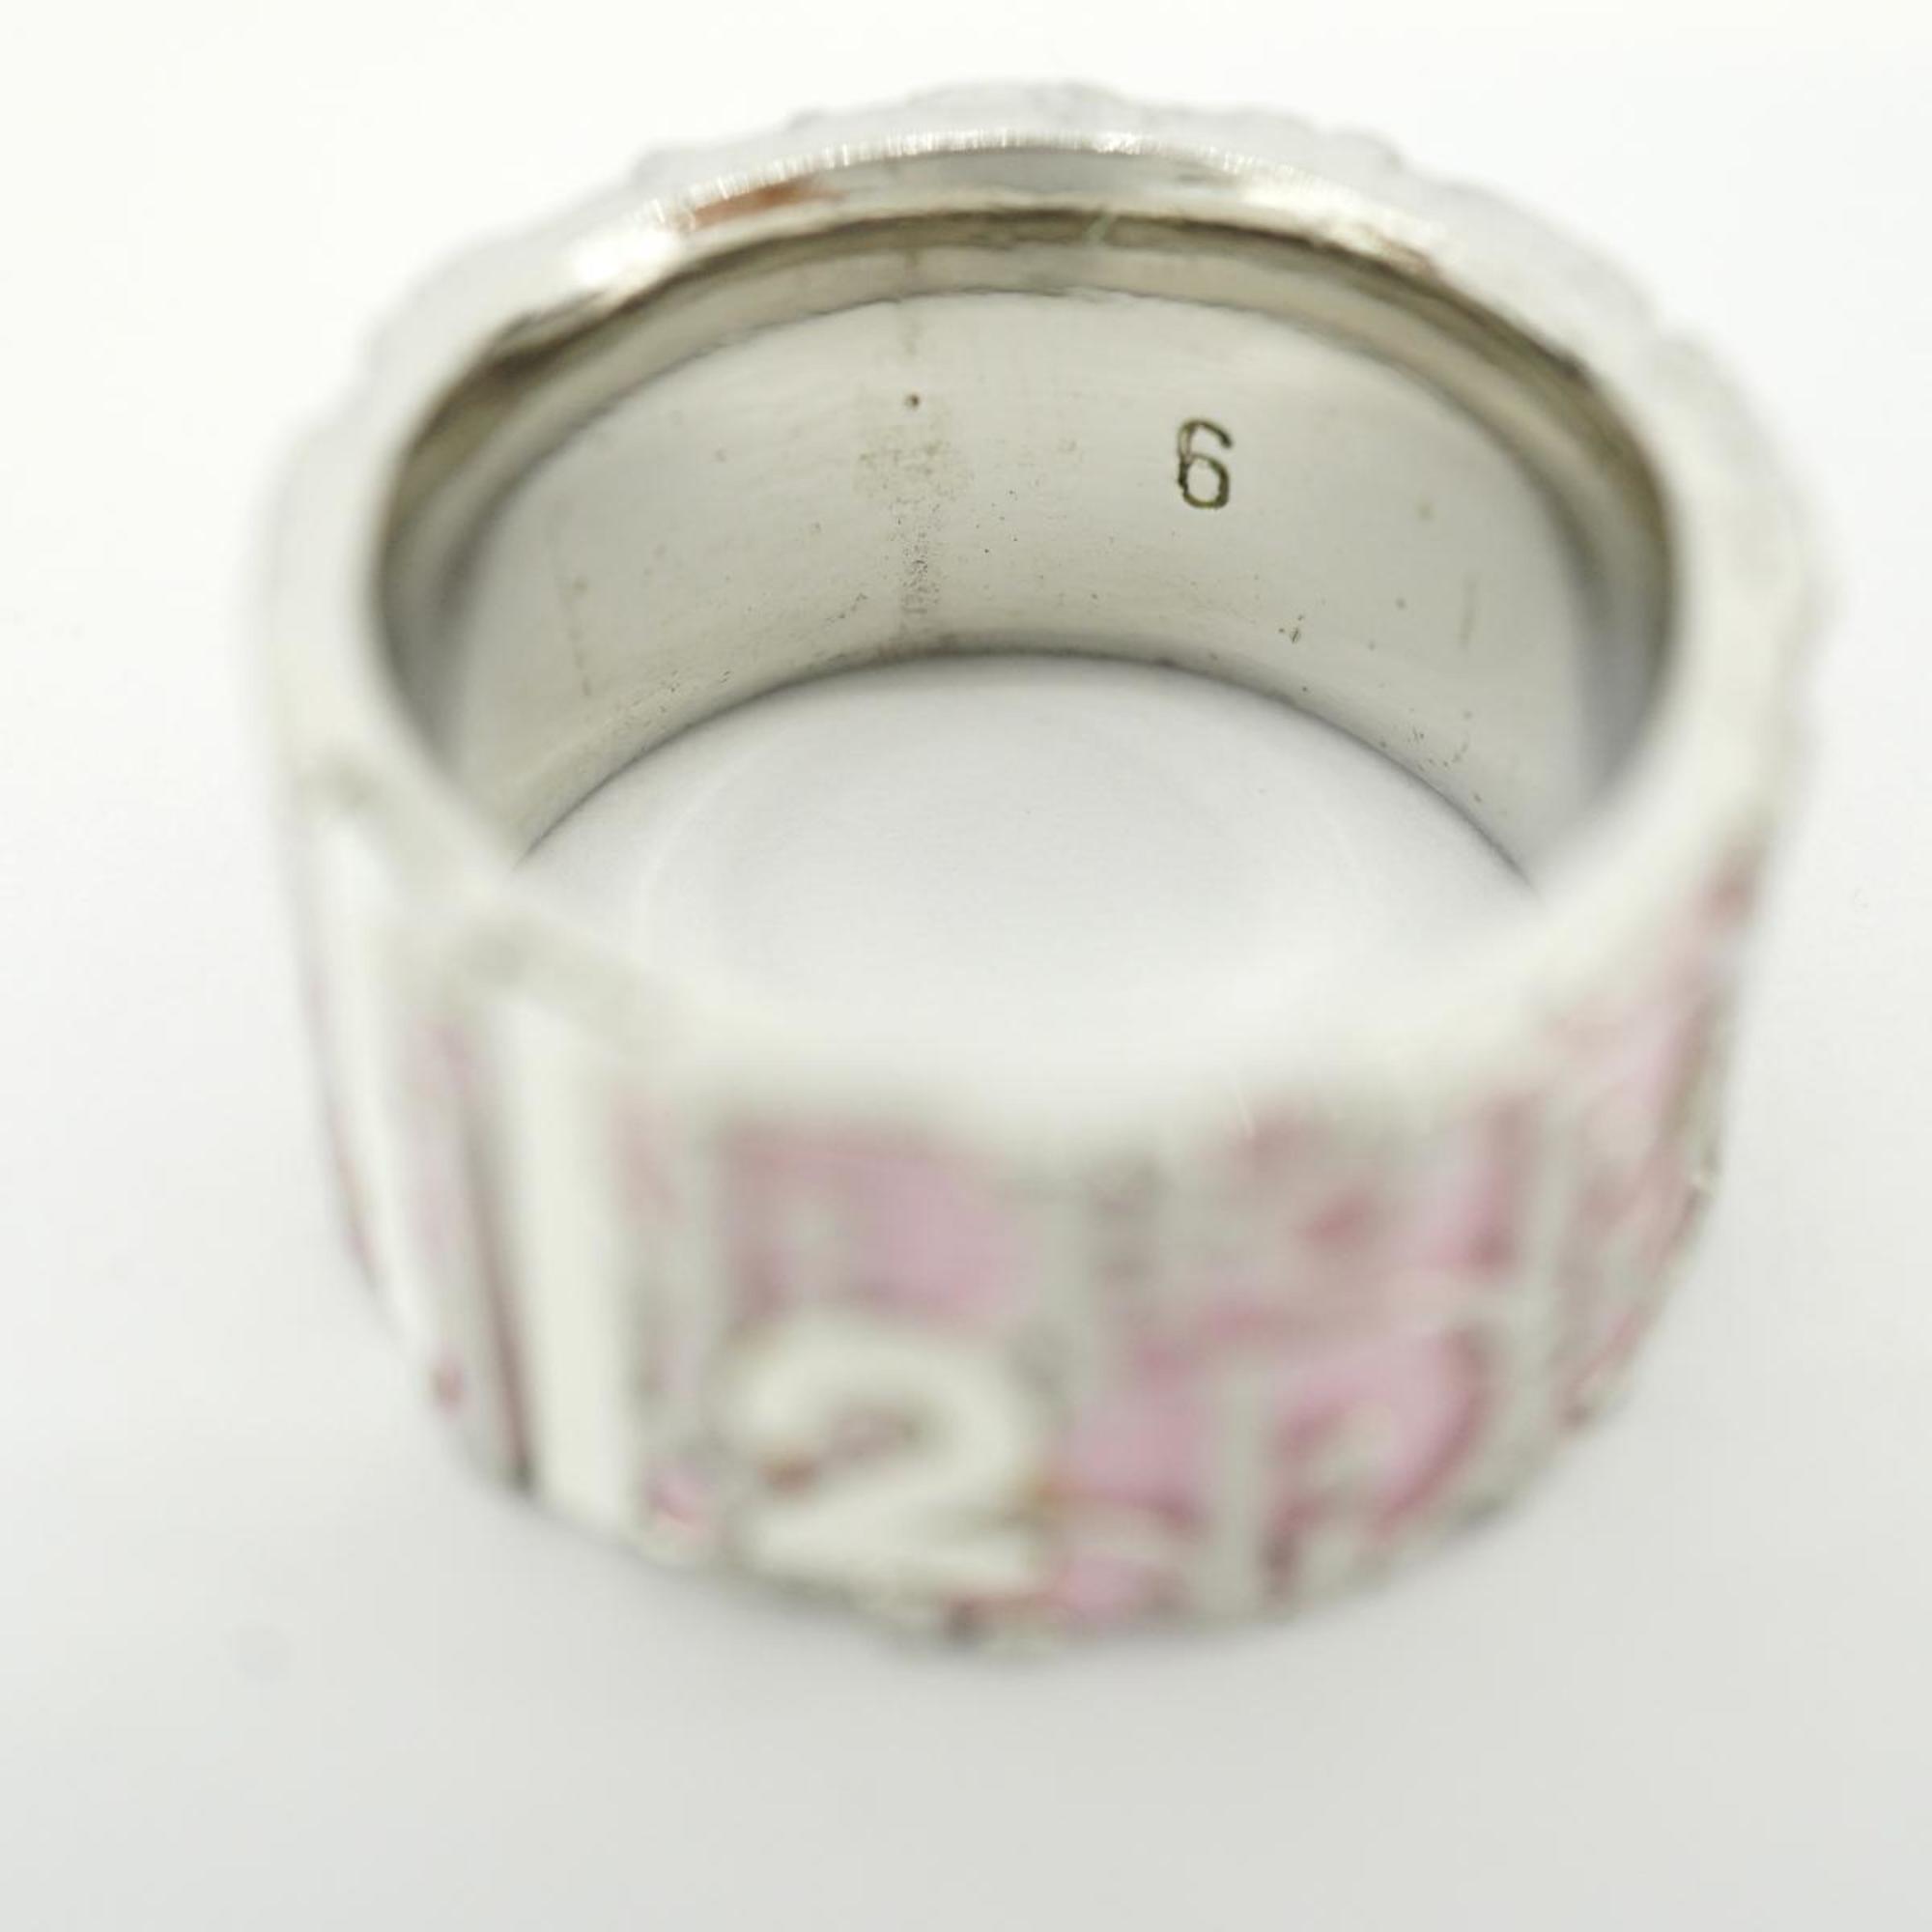 Christian Dior ring, metal, silver, pink, women's